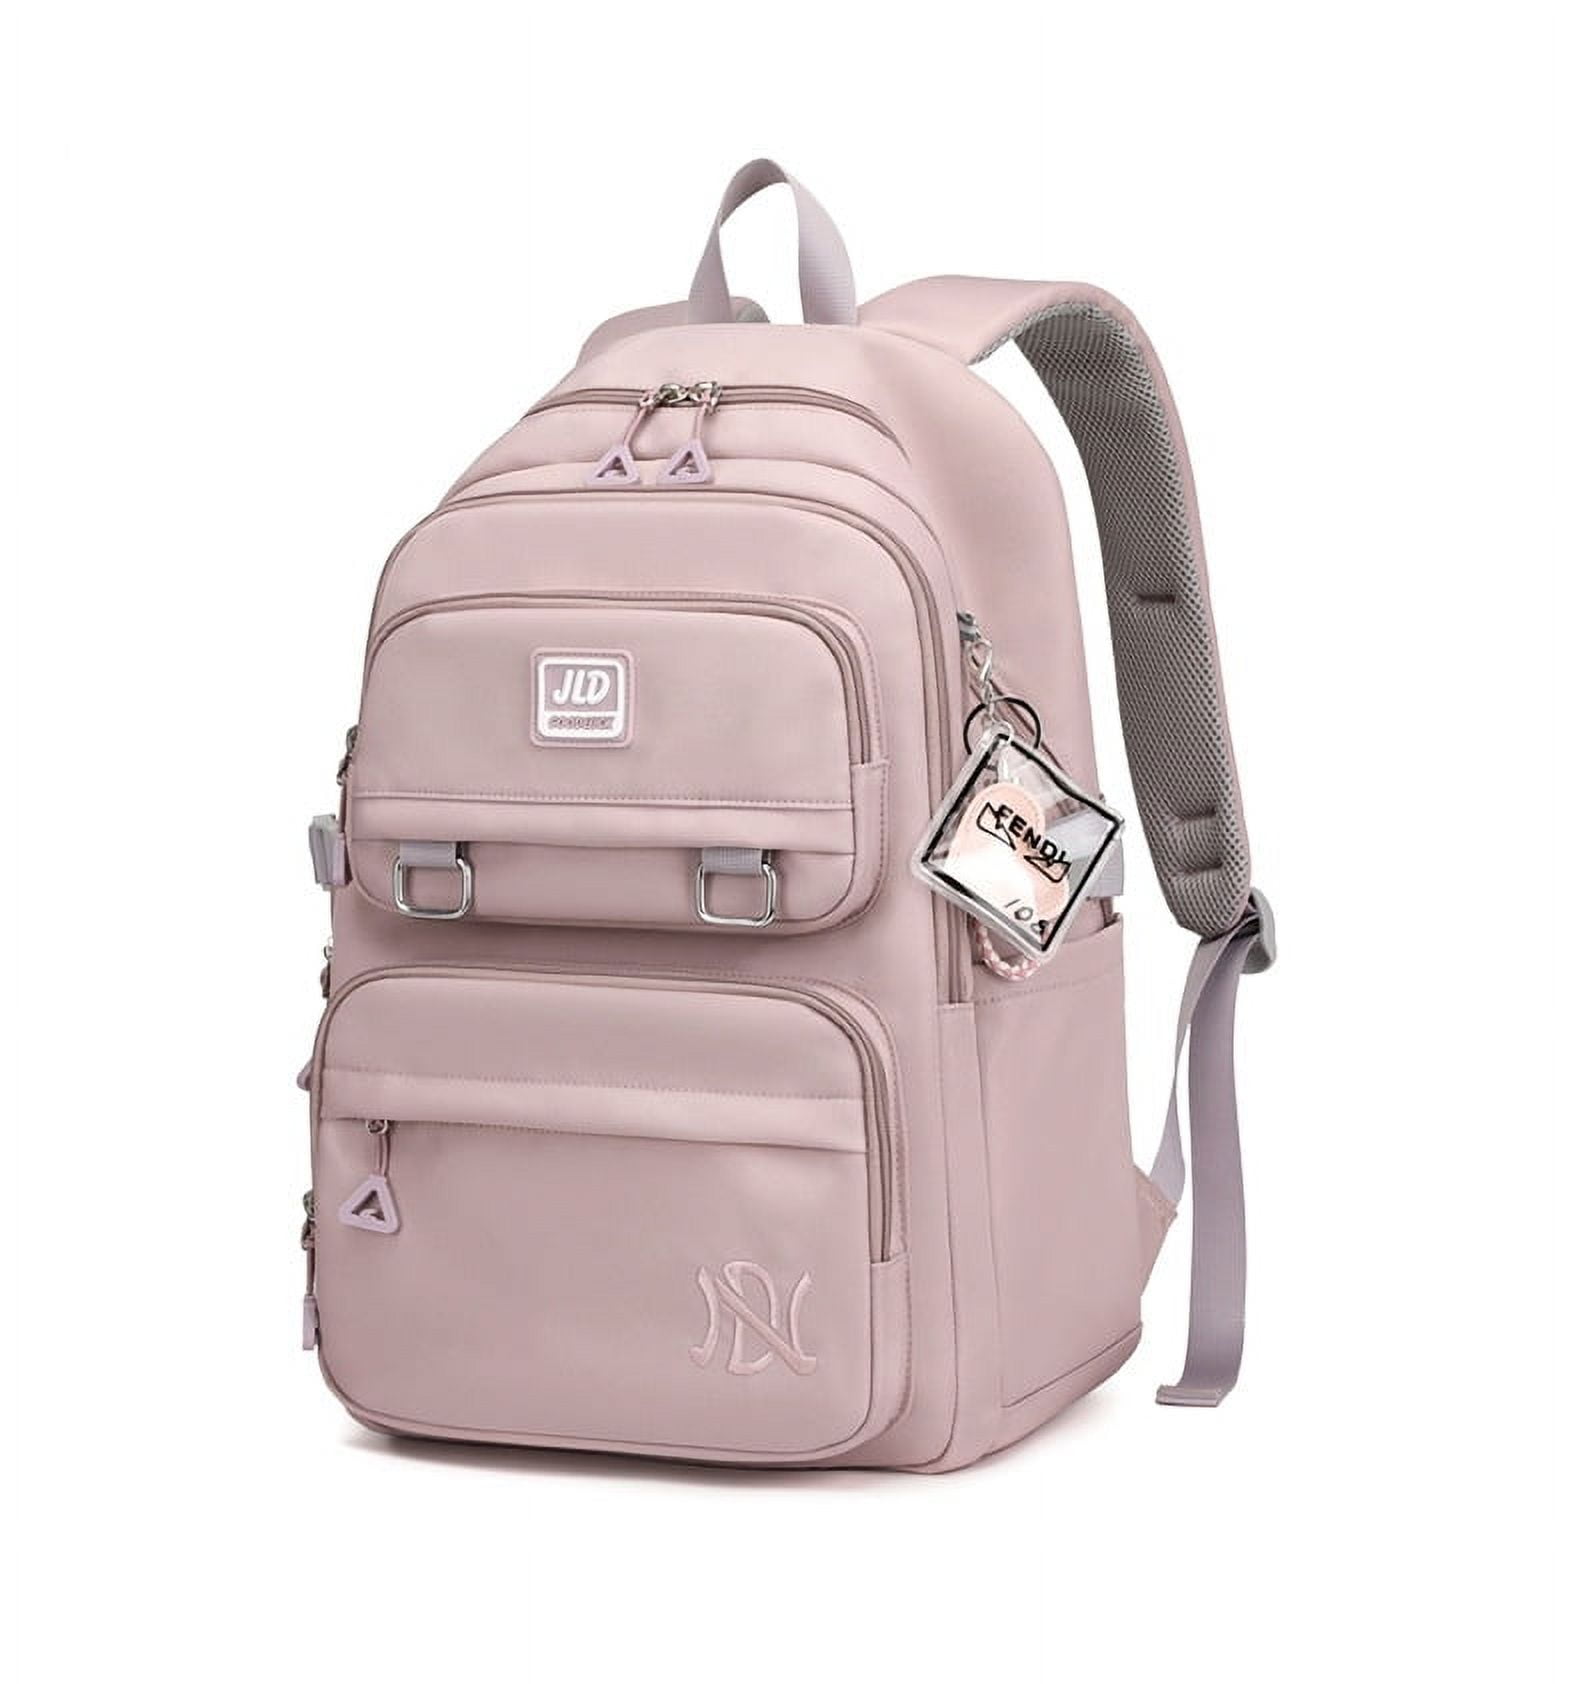 Cute Kawaii Shoulder Backpack With Zipper Perfect School Bag For Teenage  Girls Japanese Korean 230509 From Quan05, $19.14 | DHgate.Com